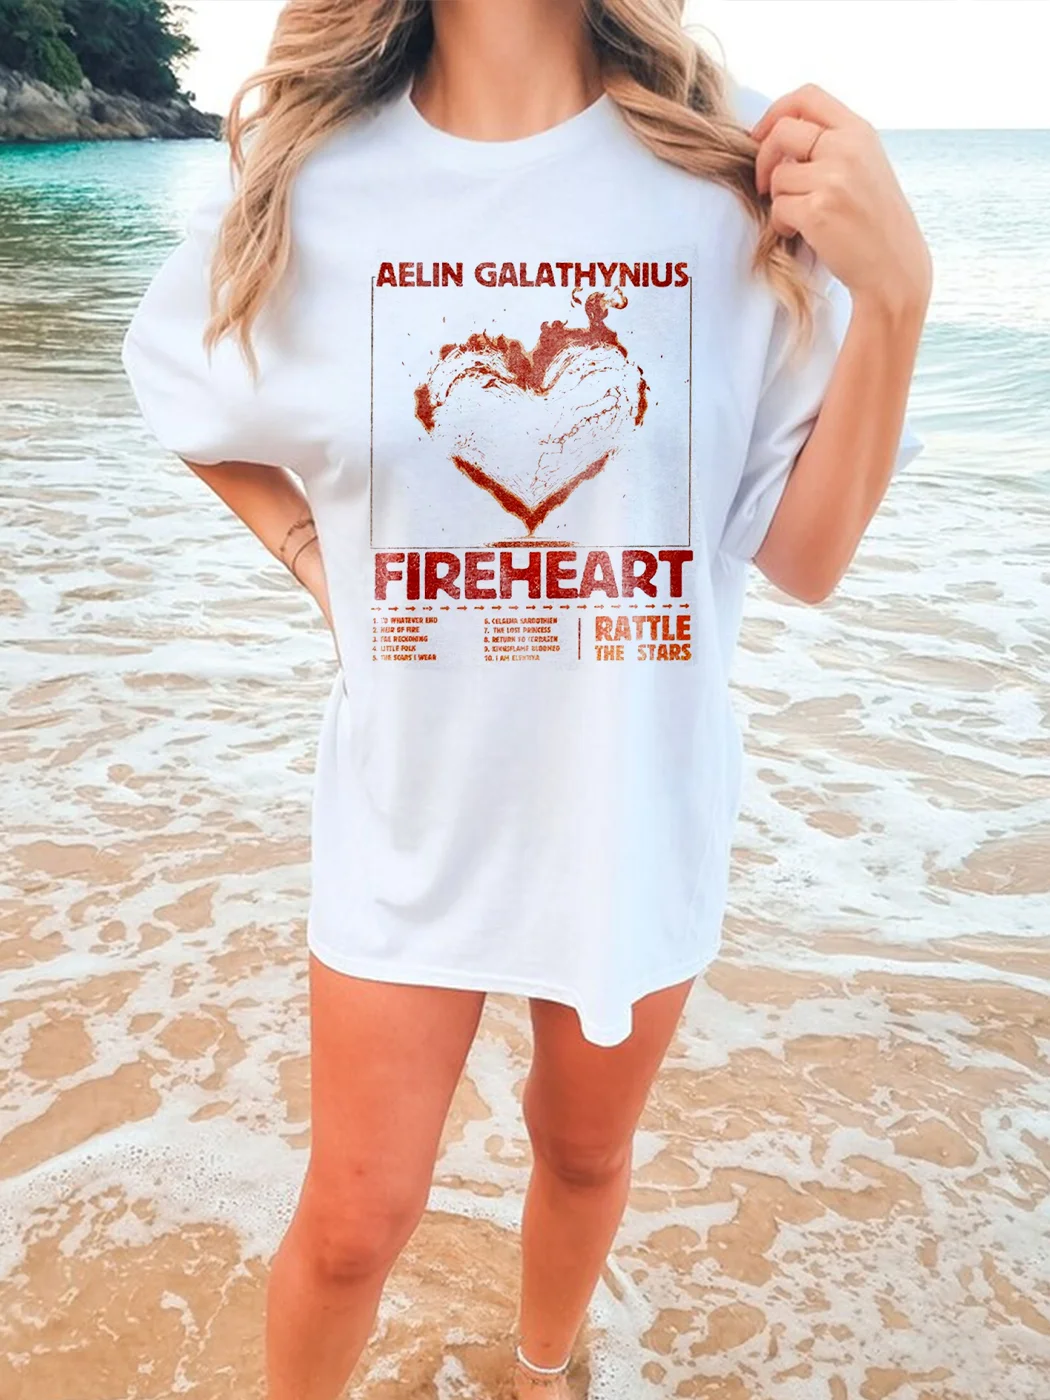 Aelin Galathynius Shirt Fireheart Terrasen Shirt / DarkAcademias /Darkacademias